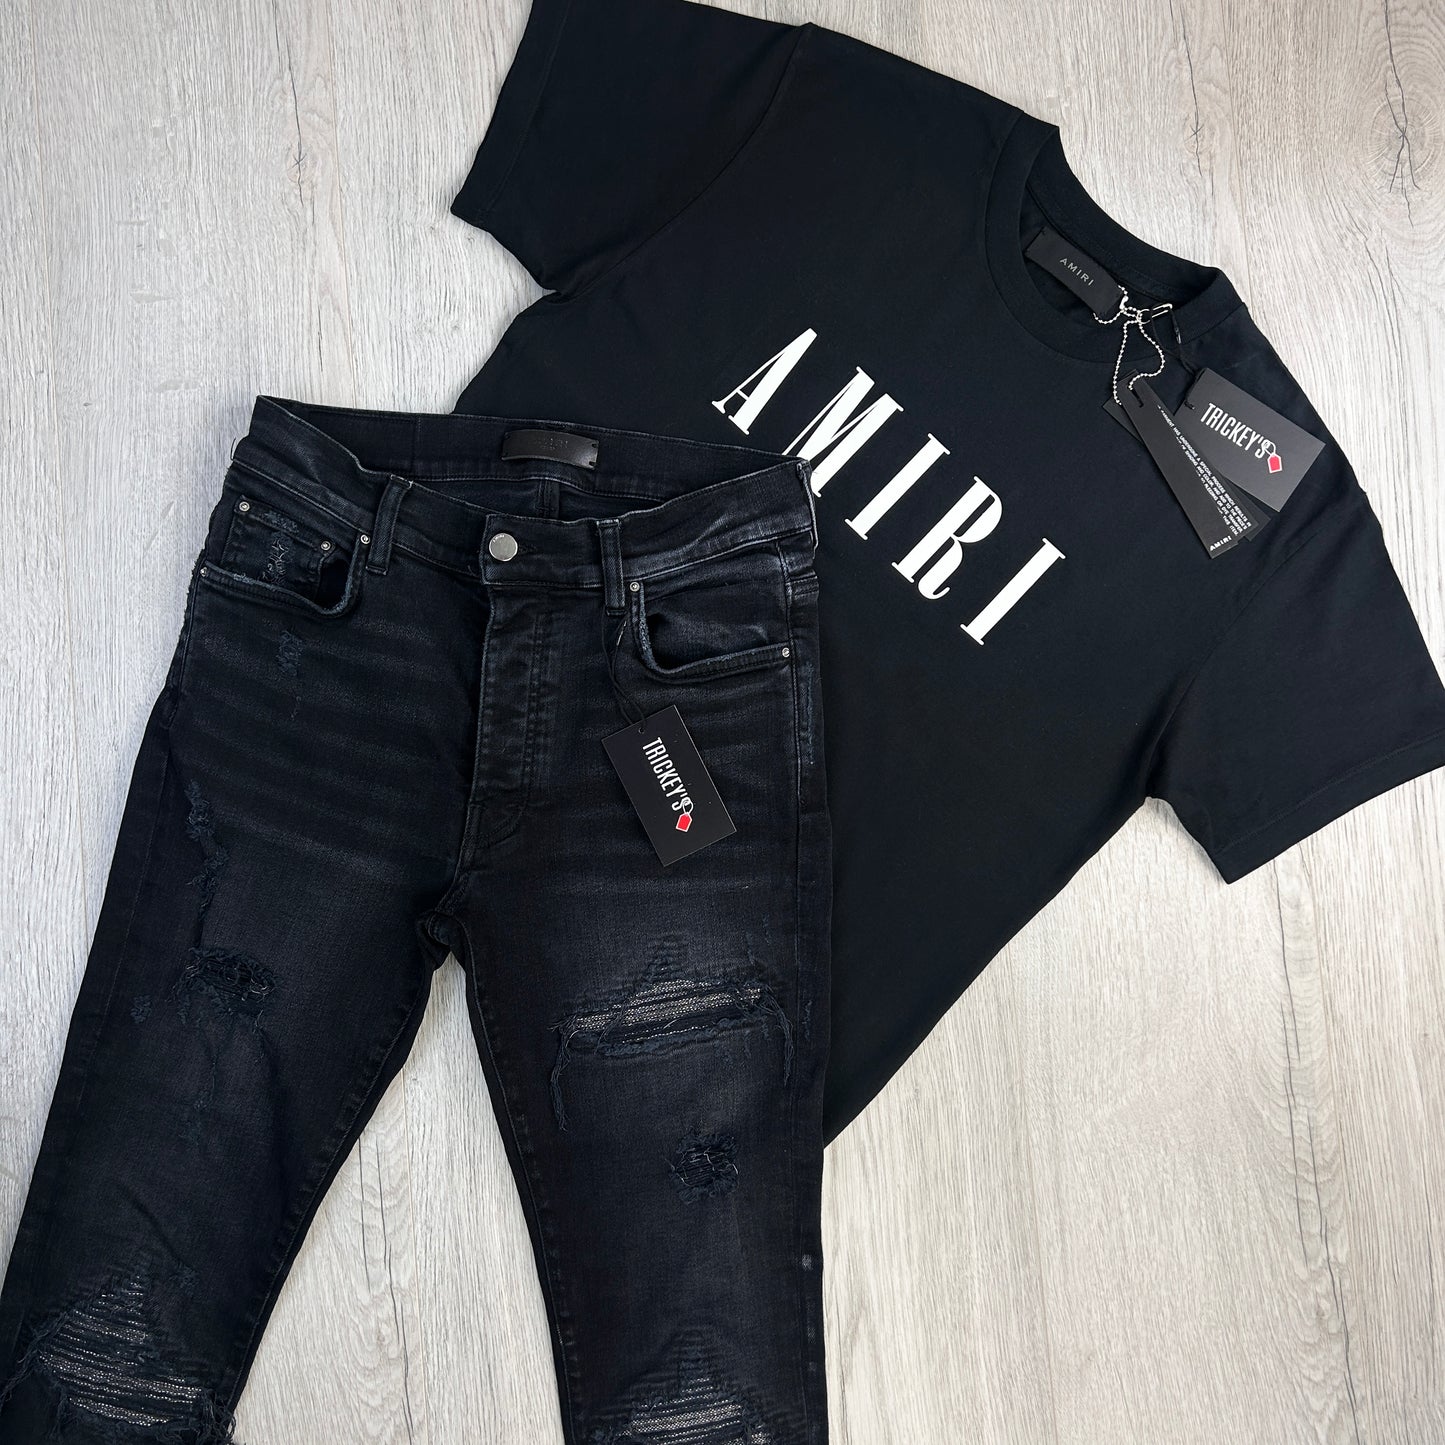 Amiri Men’s MX1 Iridescent Black Blue Distressed Jeans - Uk 30